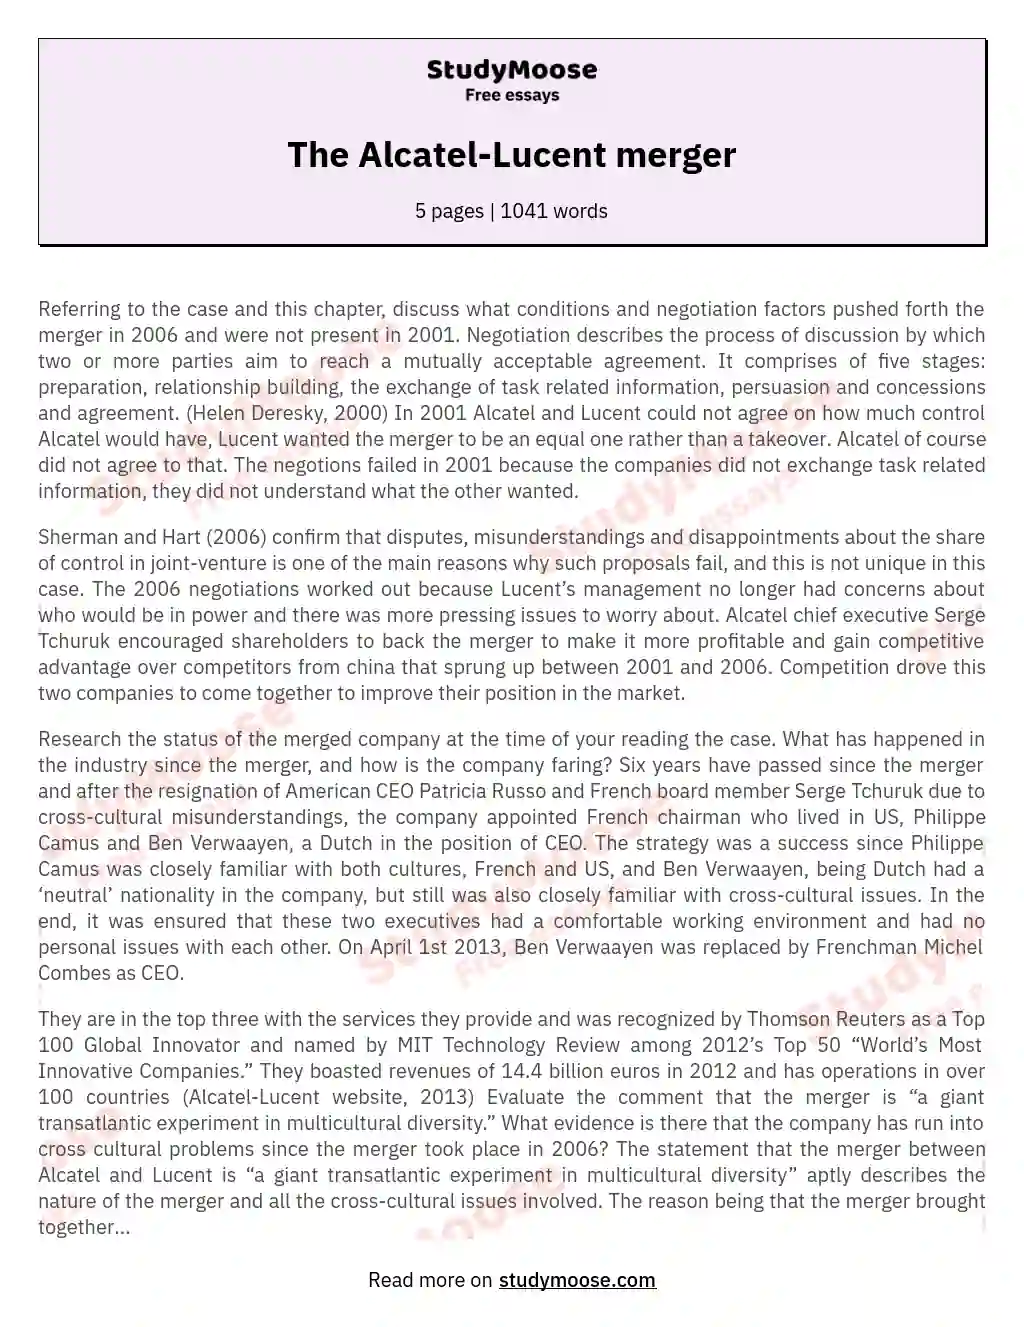 The Alcatel-Lucent merger essay